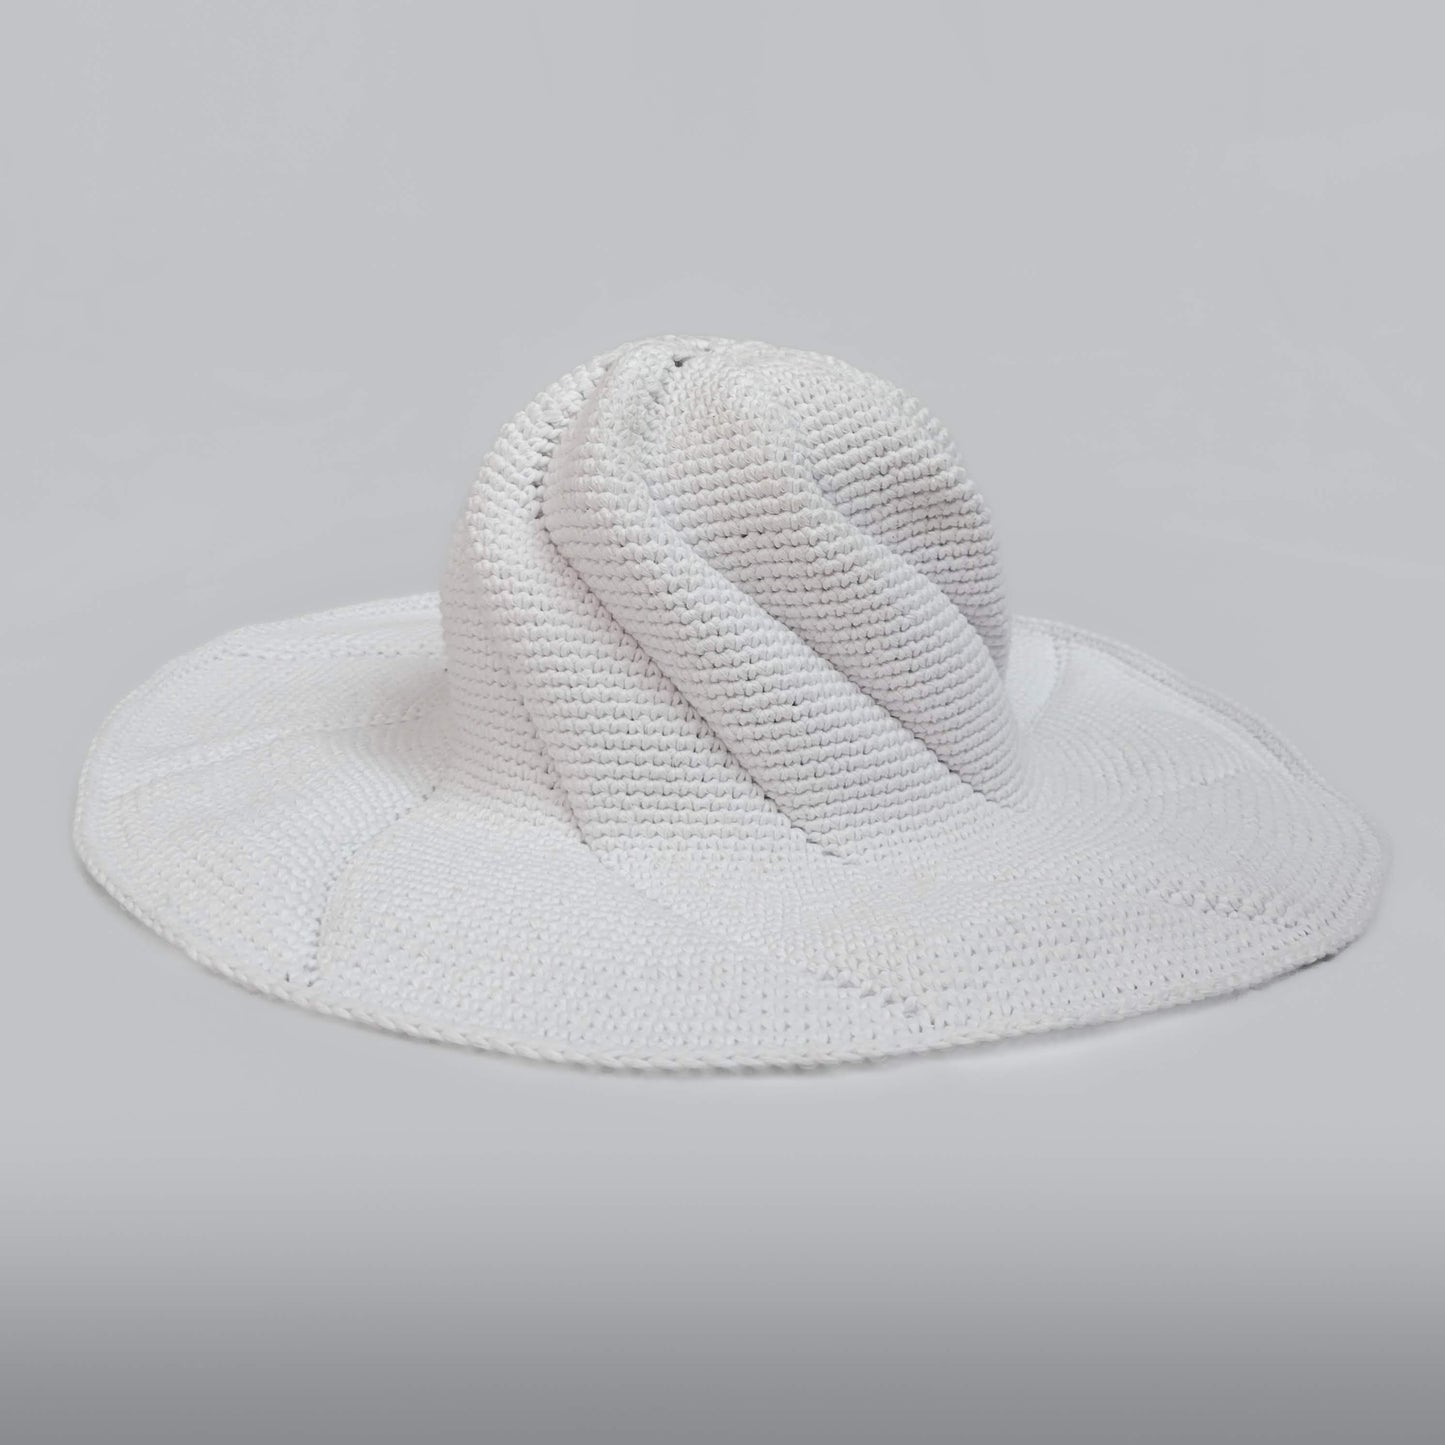 Change It Up Hat, Crochet, White